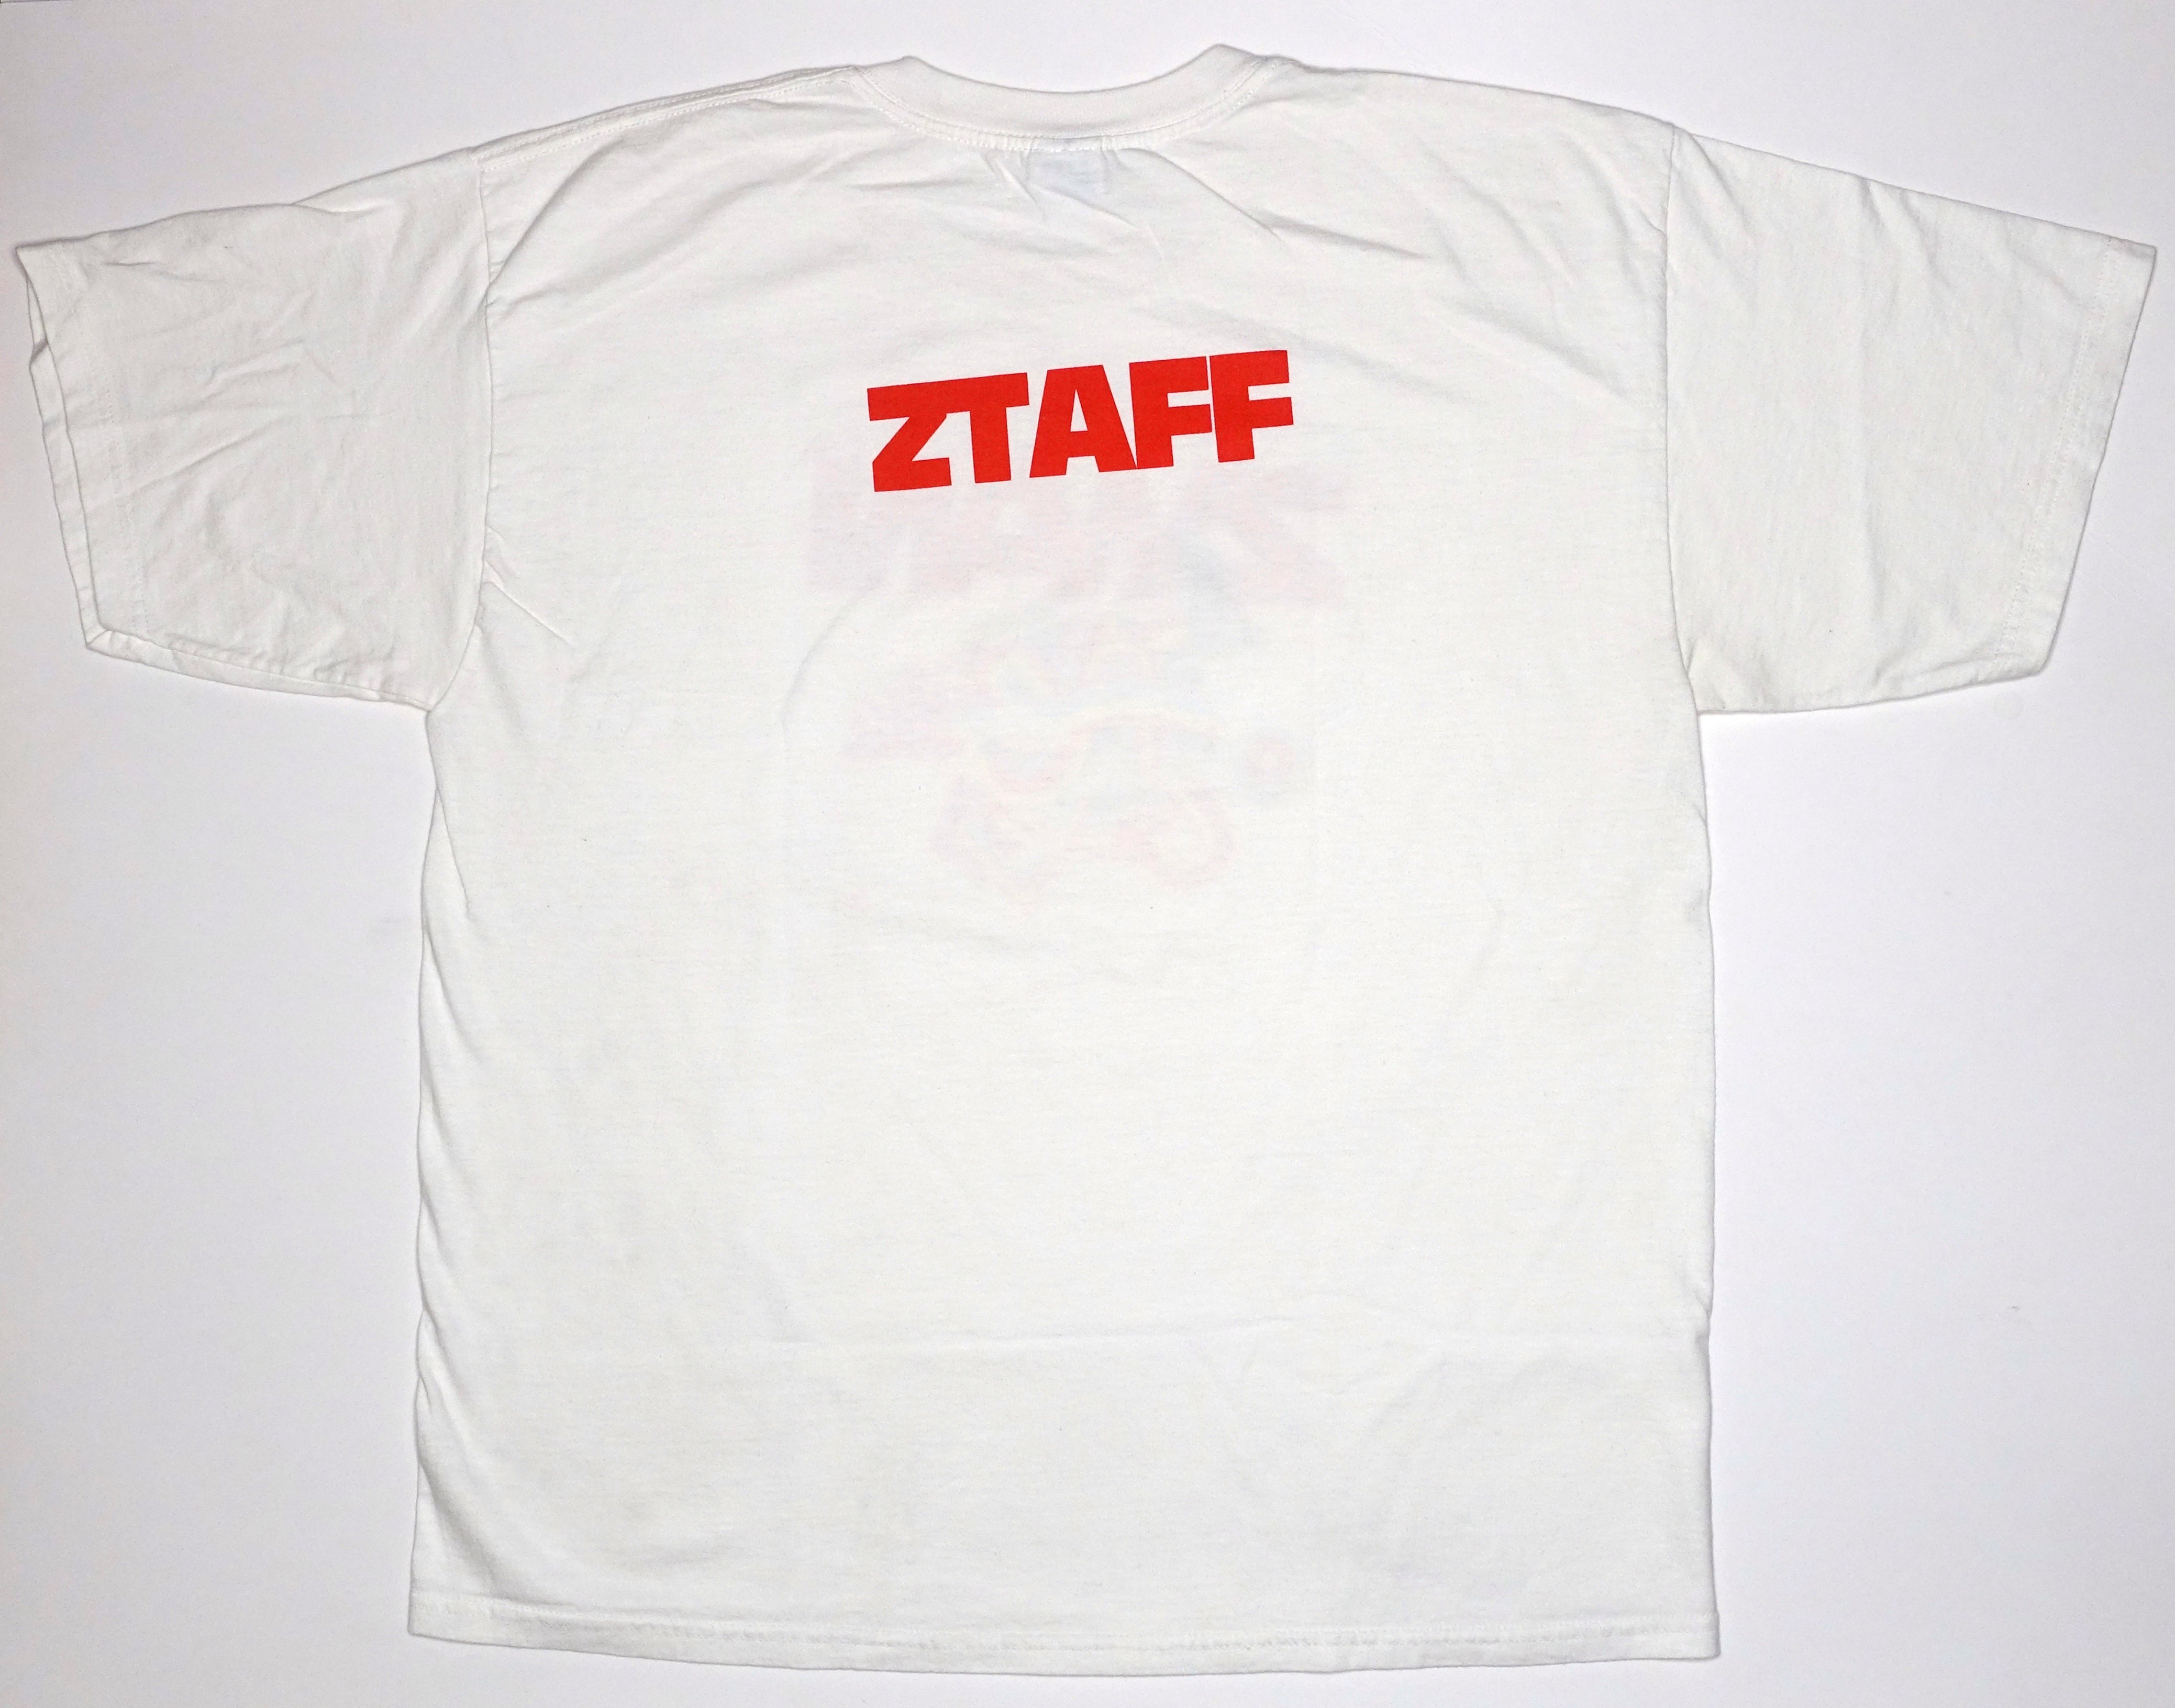 Zwan - Mary Star Of The Sea Ztaff 2003 Tour Shirt Size XL